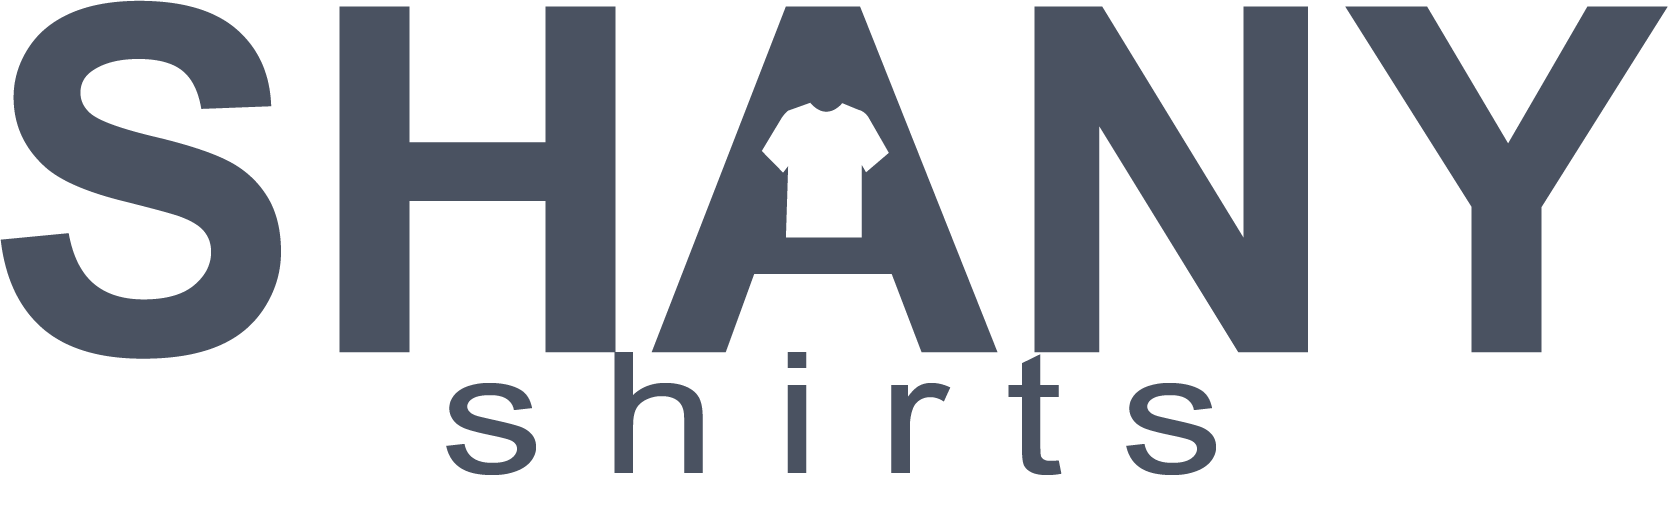 shanyshirts logo dunkel